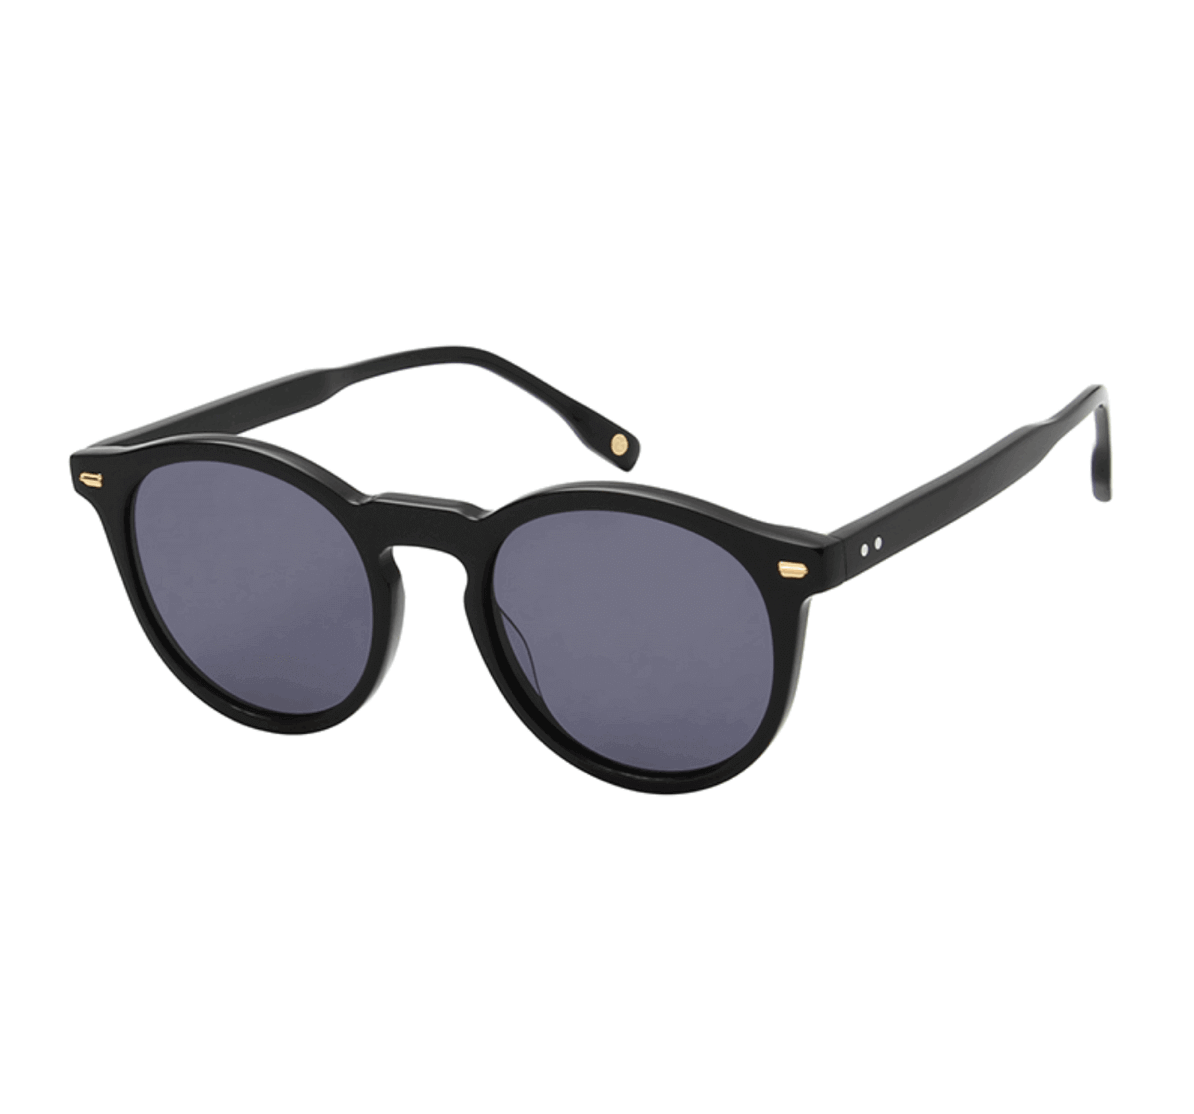 polarized acetate sunglasses, acetate sunglasses manufacturer, sunglasses factory, polarized sunglasses manufacturers, eyeglasses suppliers